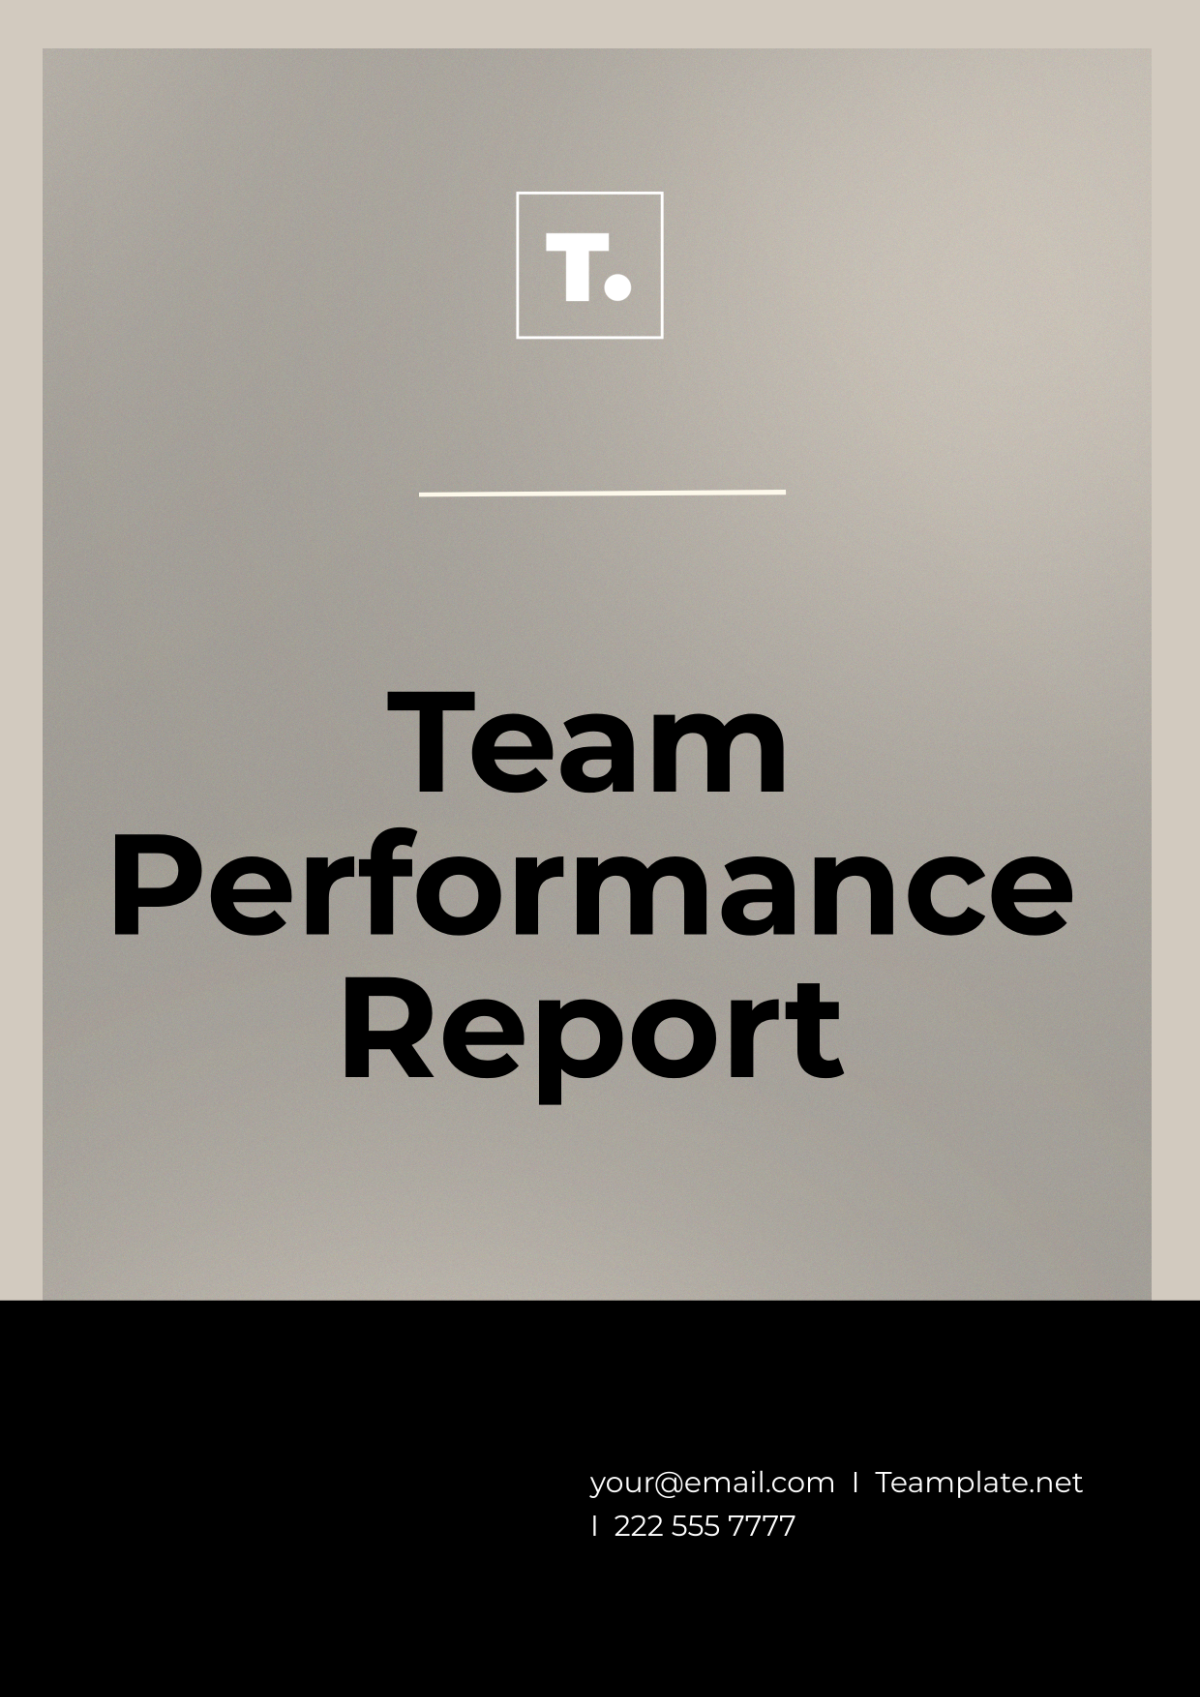 Team Performance Report Template